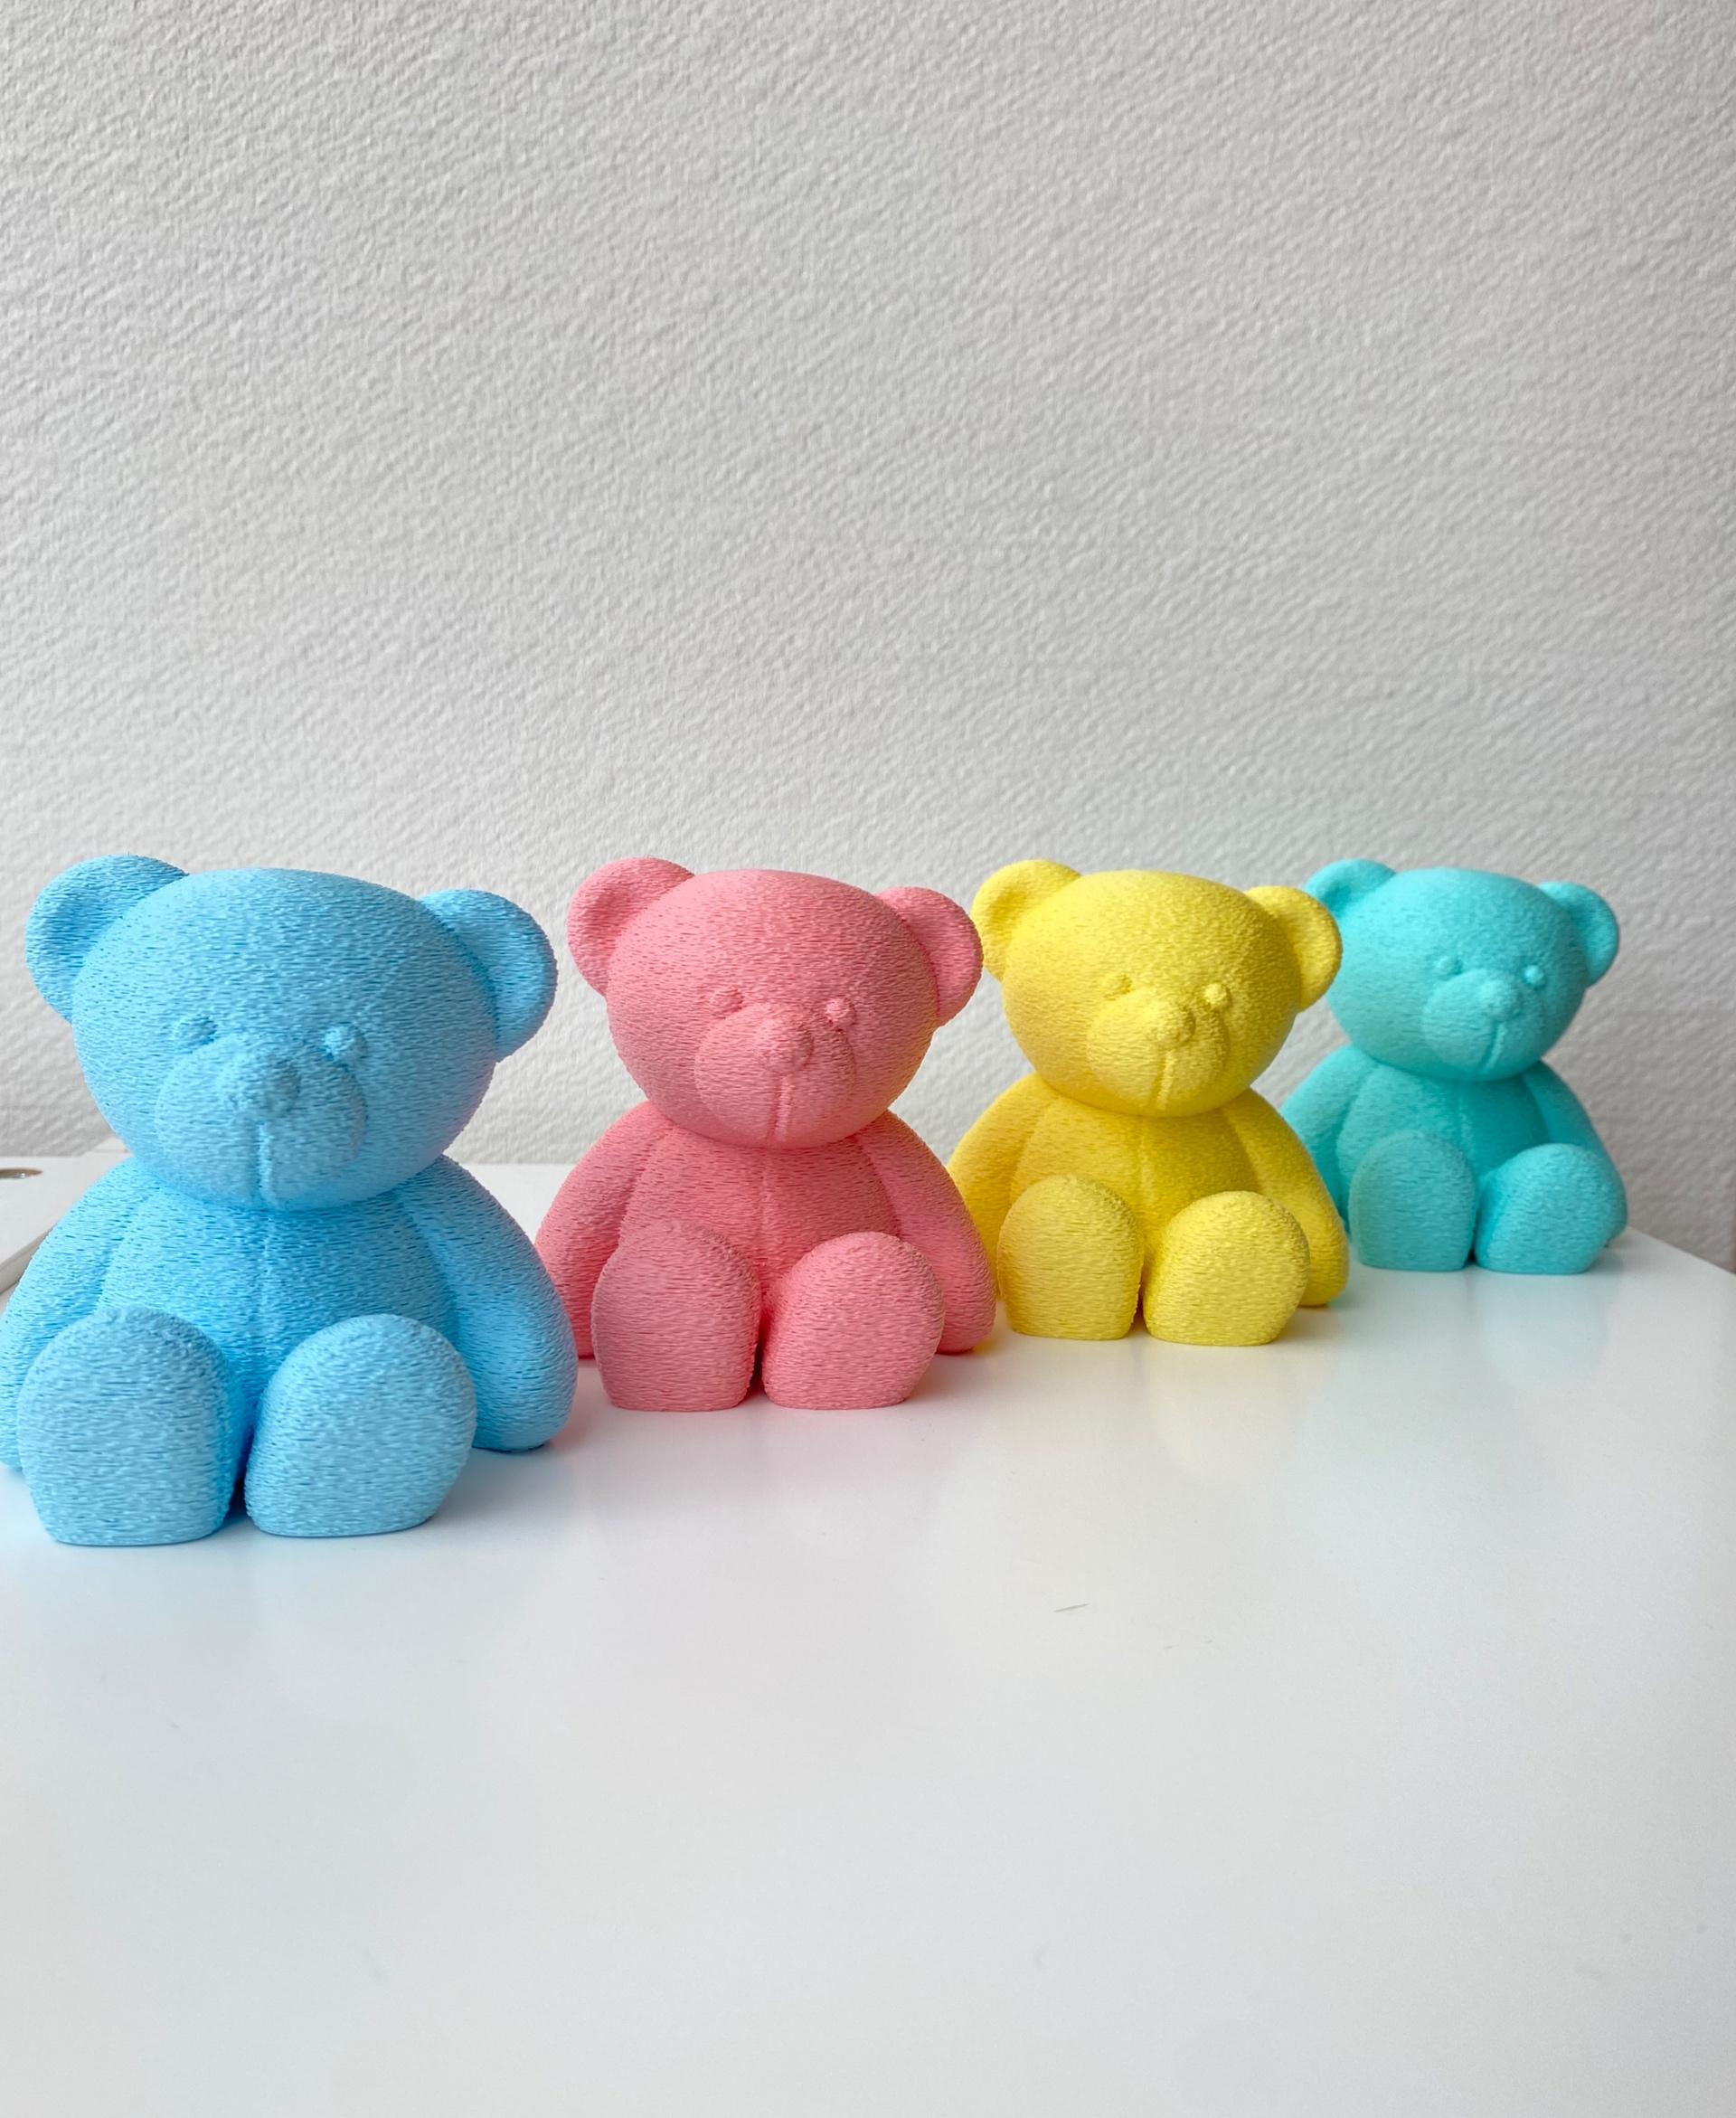 Barry Bear - Barry bear family!
Filament PM  - 3d model